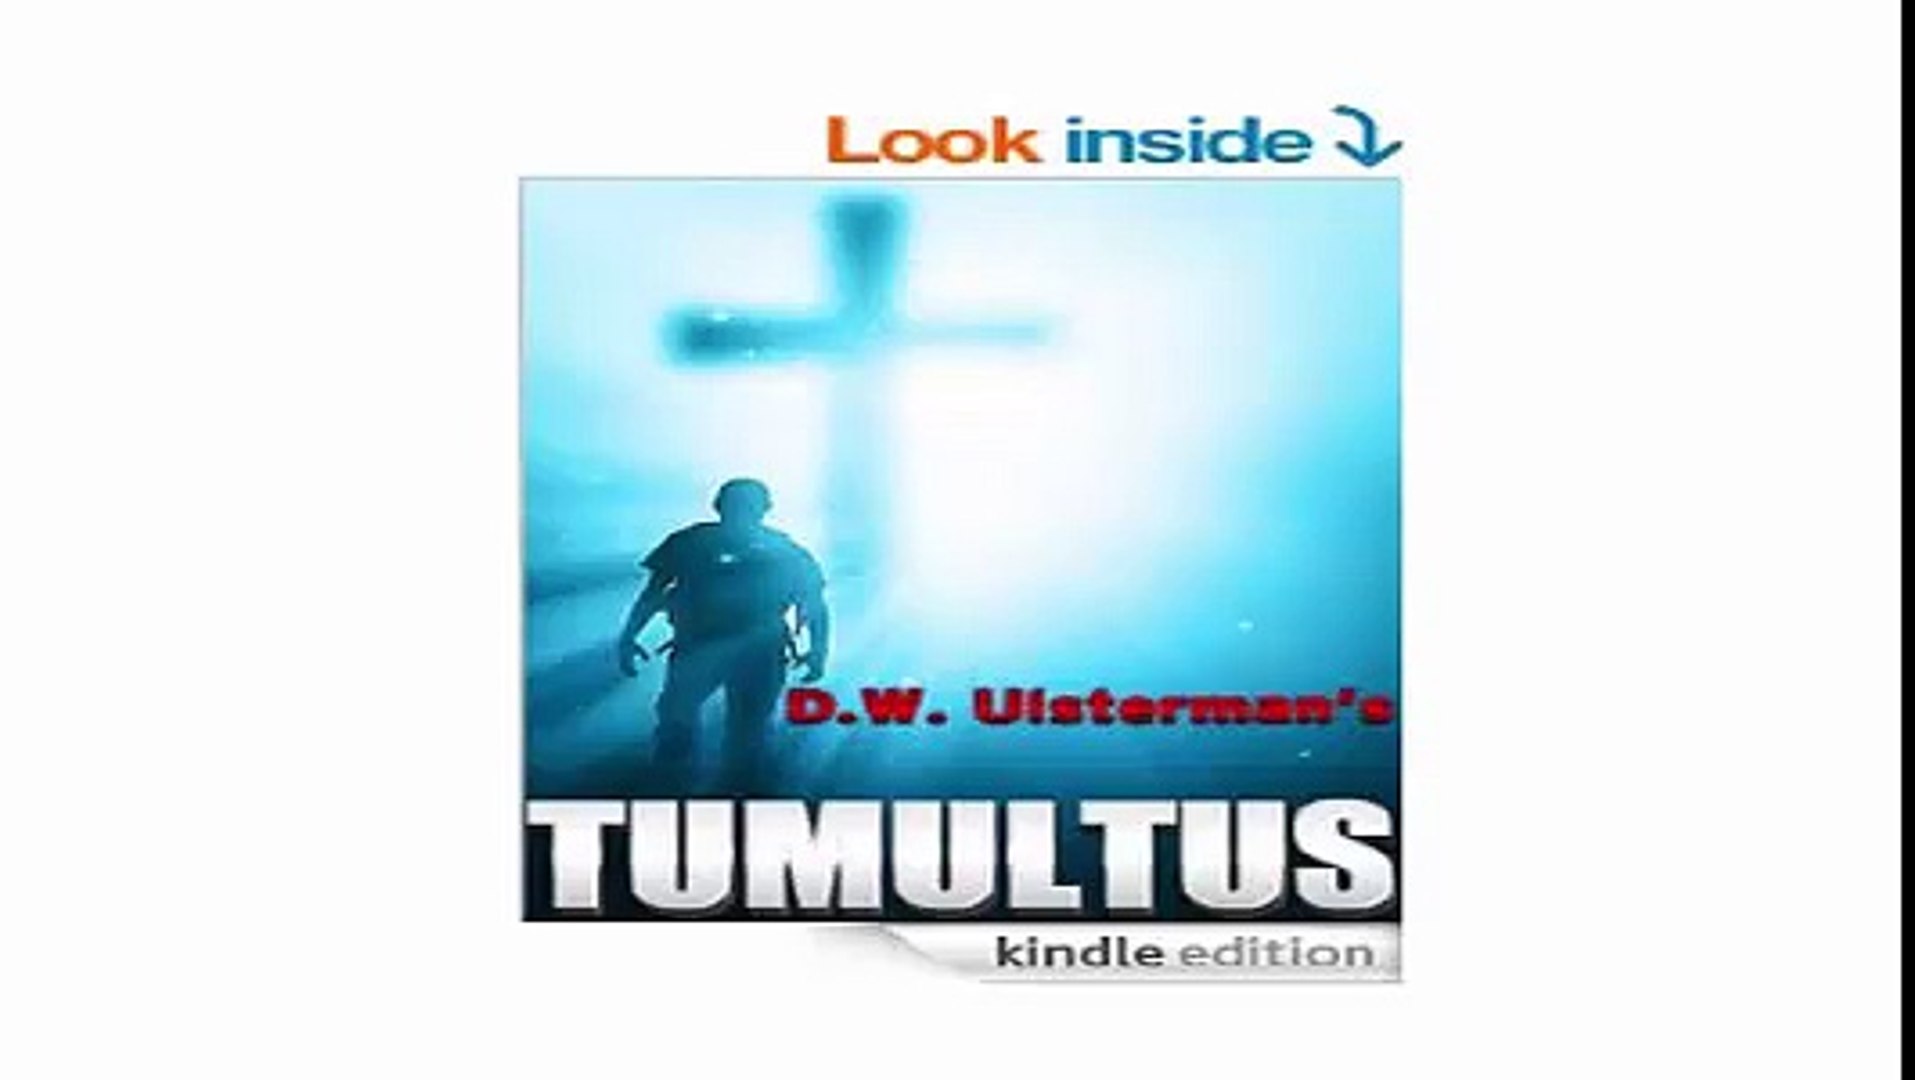 TUMULTUS An Action and Suspense Thriller (Mac Walker Book 5)